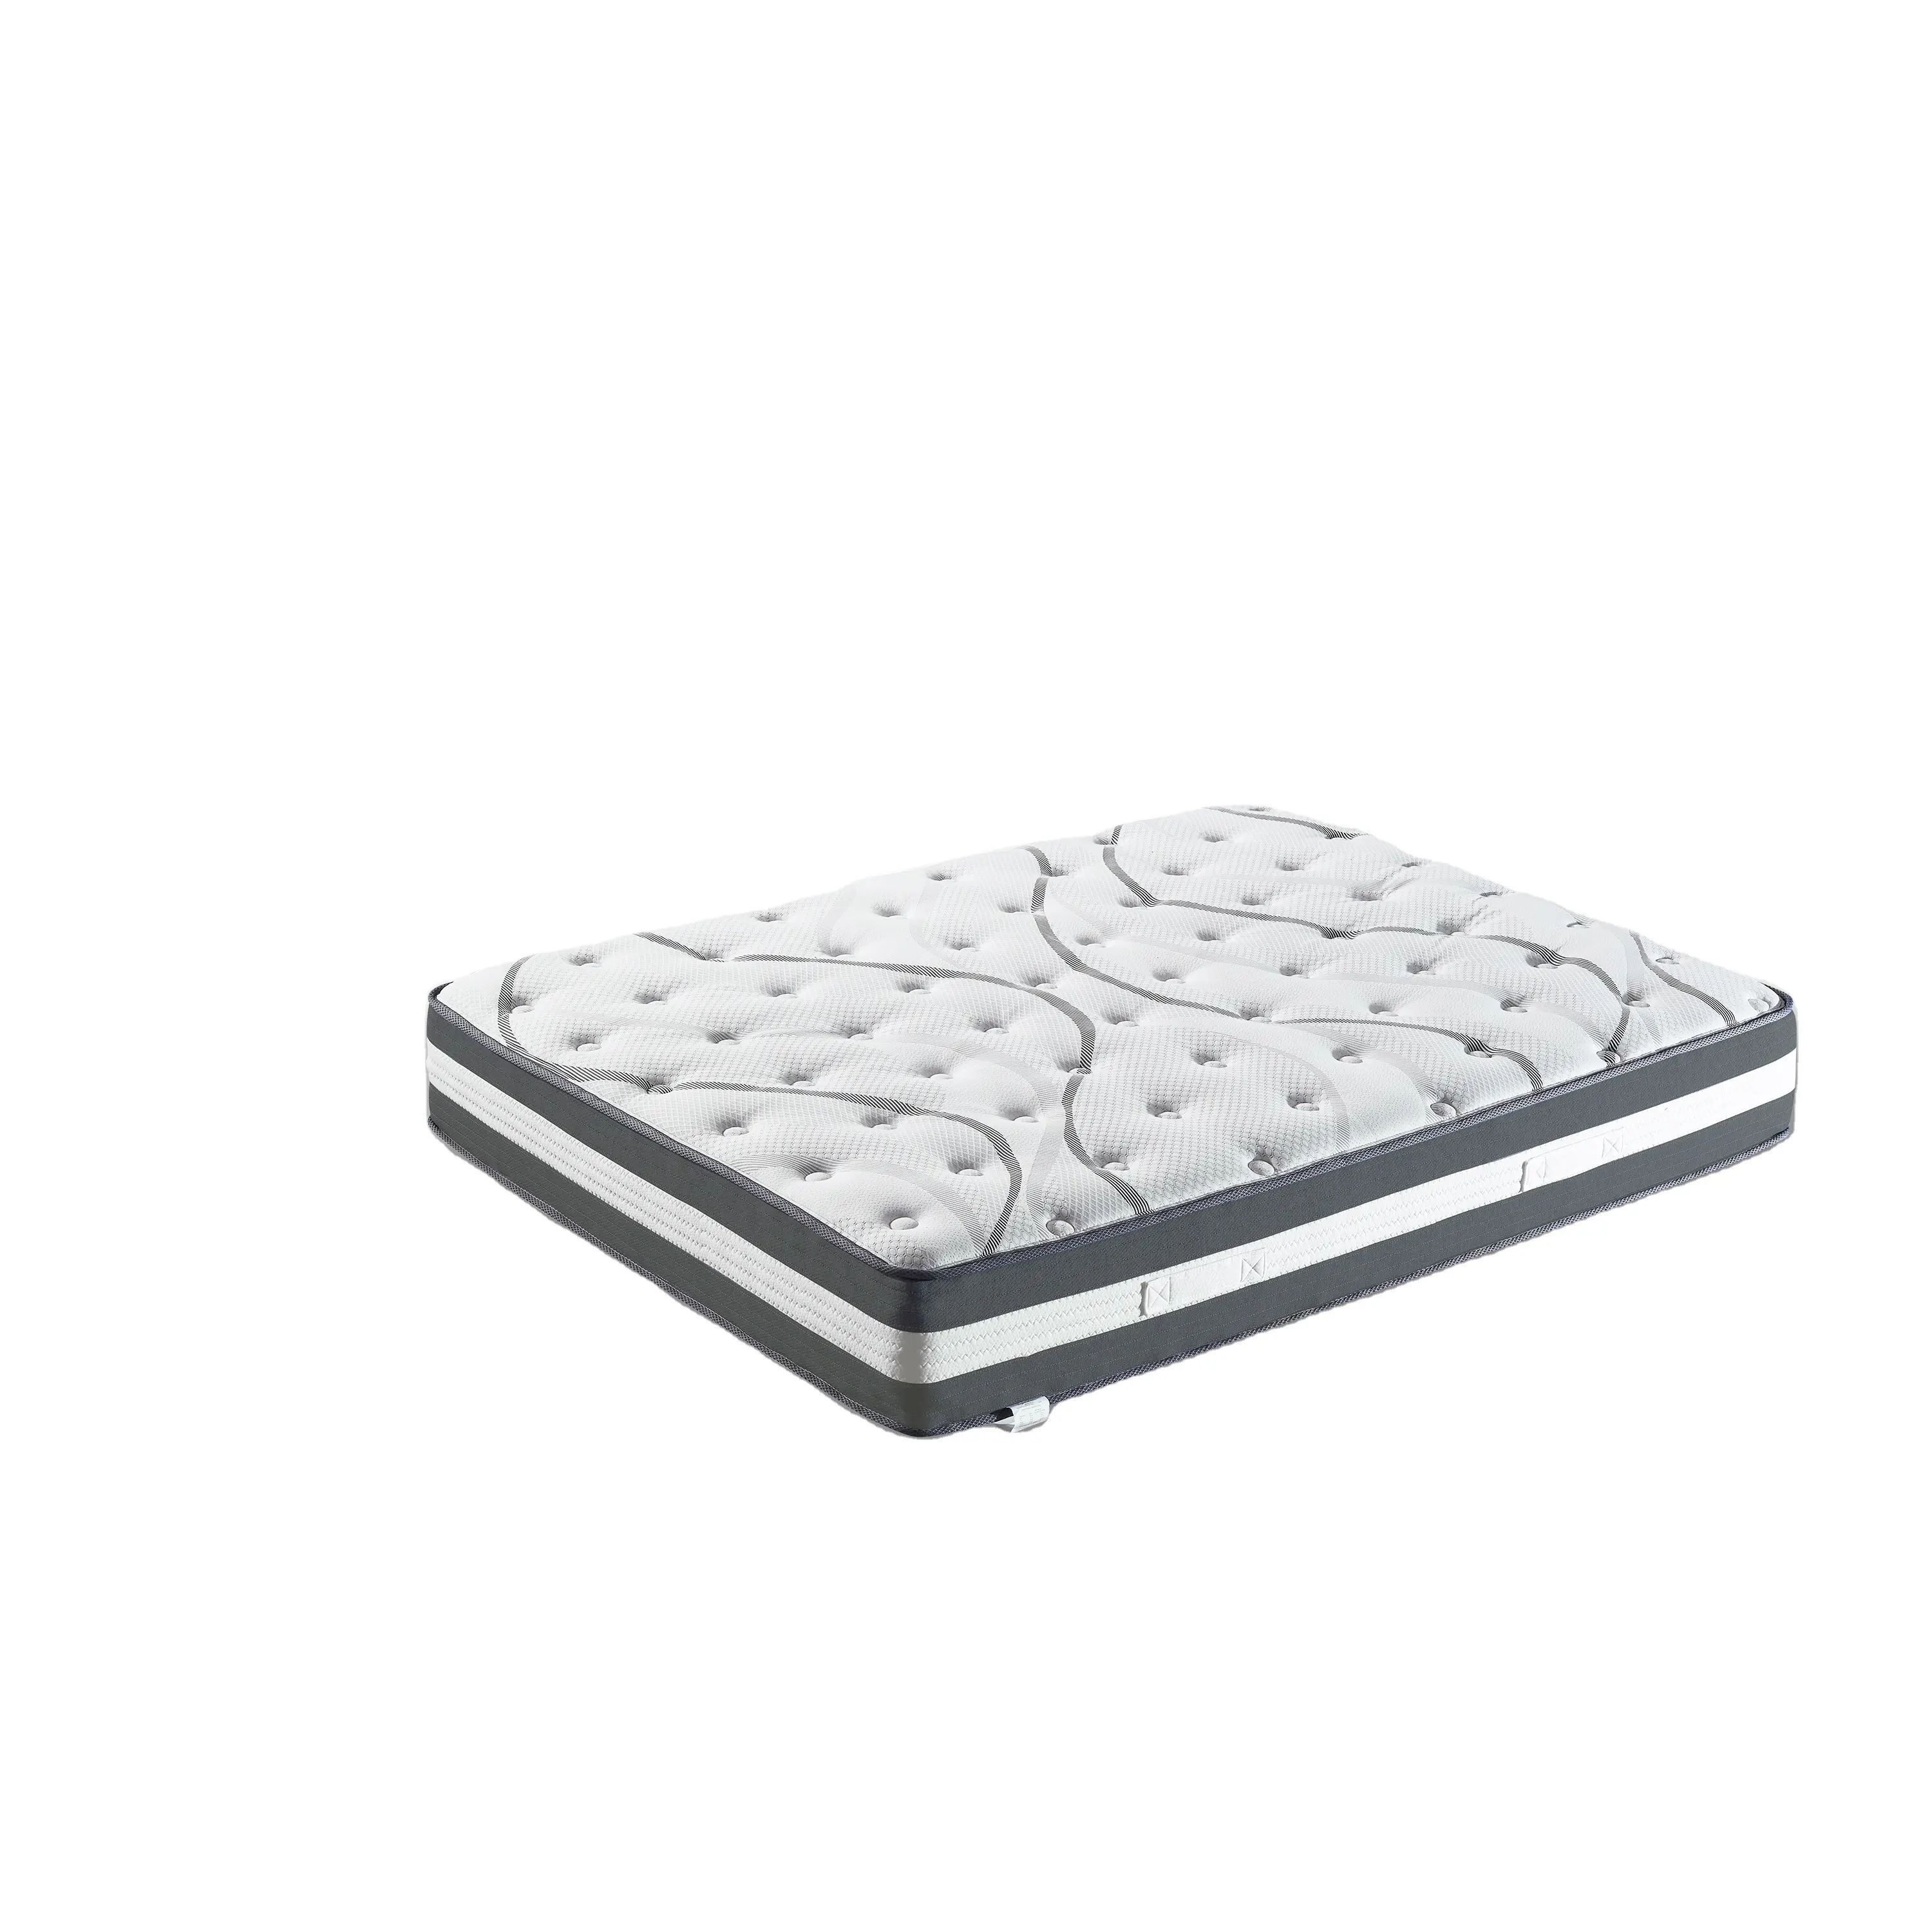 Stock in US! 12" Hybrid Pocket Spring Mattress-QUEEN luxury latex memory foam hotel pocket spring bed mattress